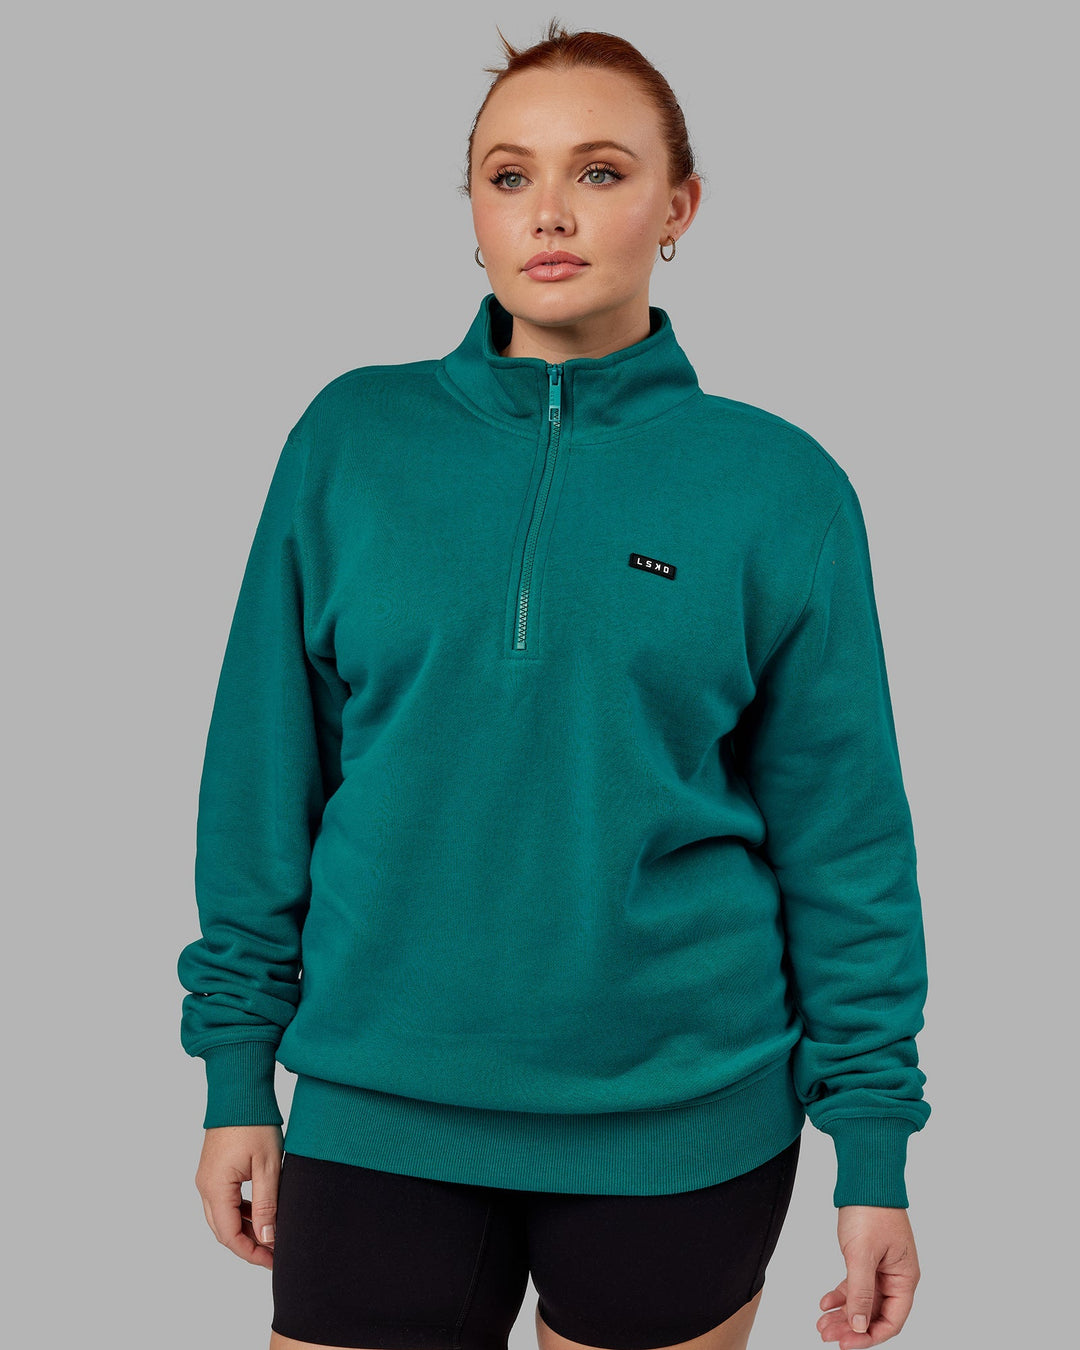 Unisex Fundamental 1/4 Zip Sweater - Deep Lake